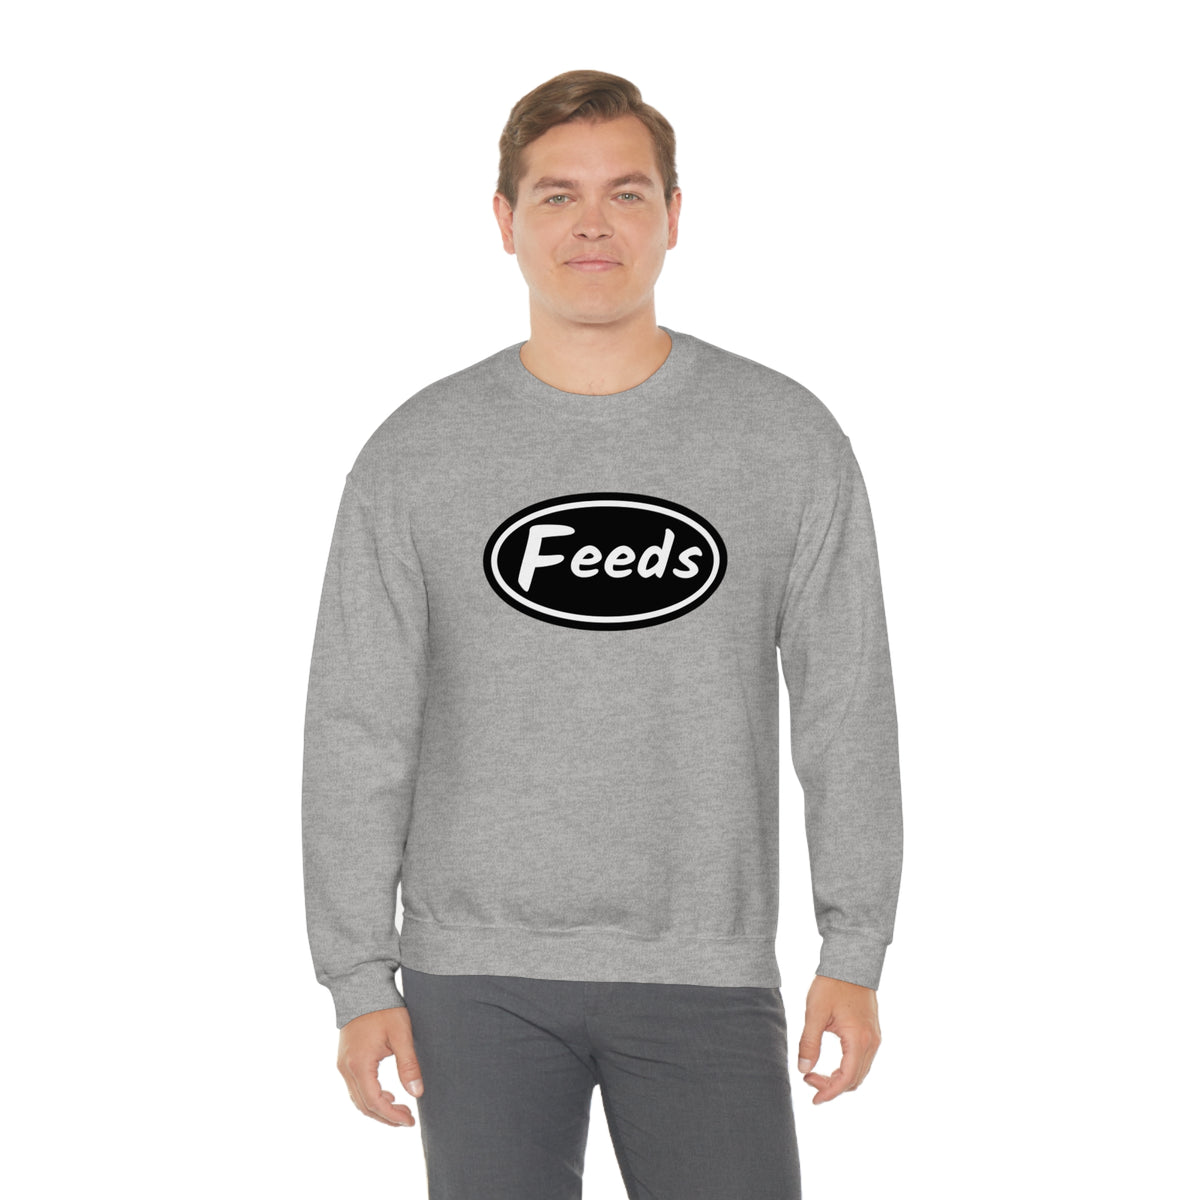 Feeds Pullover - Sweatshirt - Twisted Jezebel